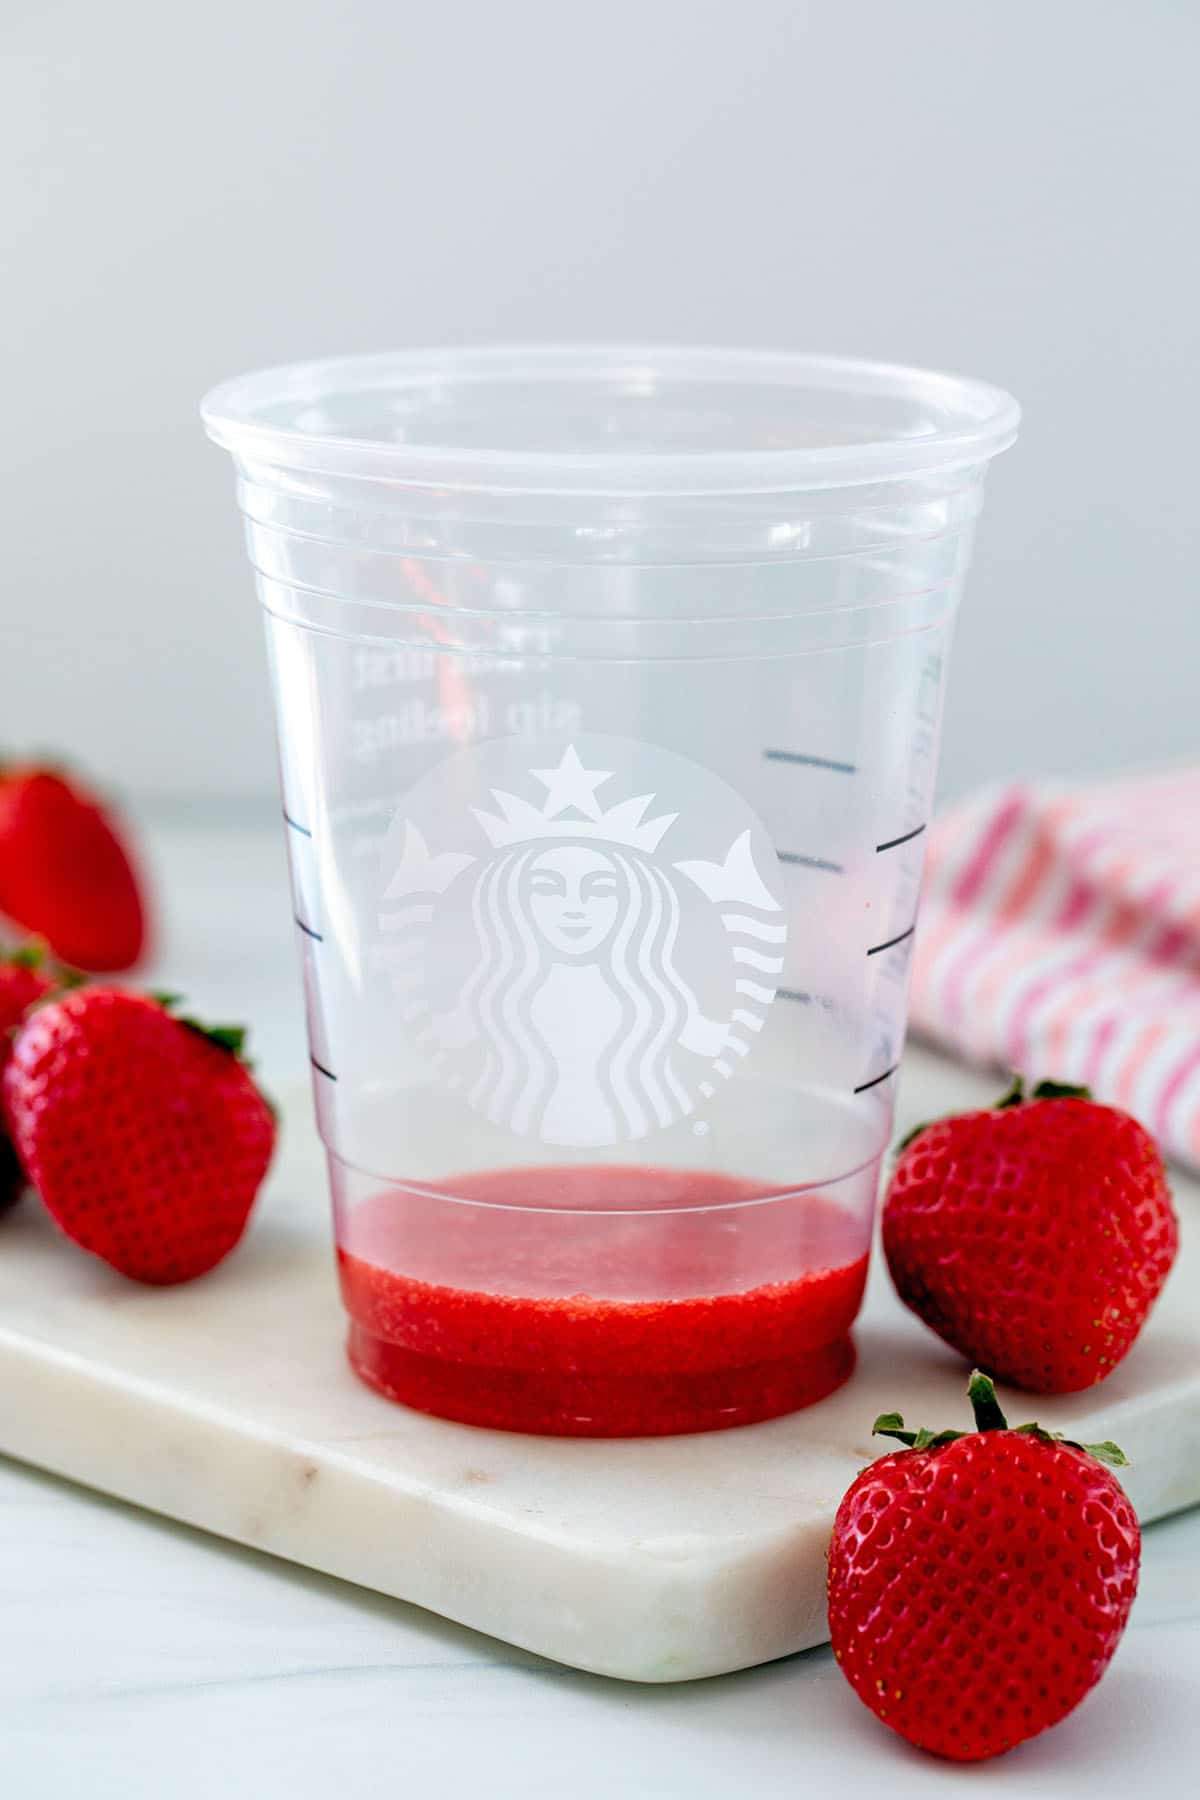 https://wearenotmartha.com/wp-content/uploads/Strawberry-Puree-in-Starbucks-Cup-2-2.jpg